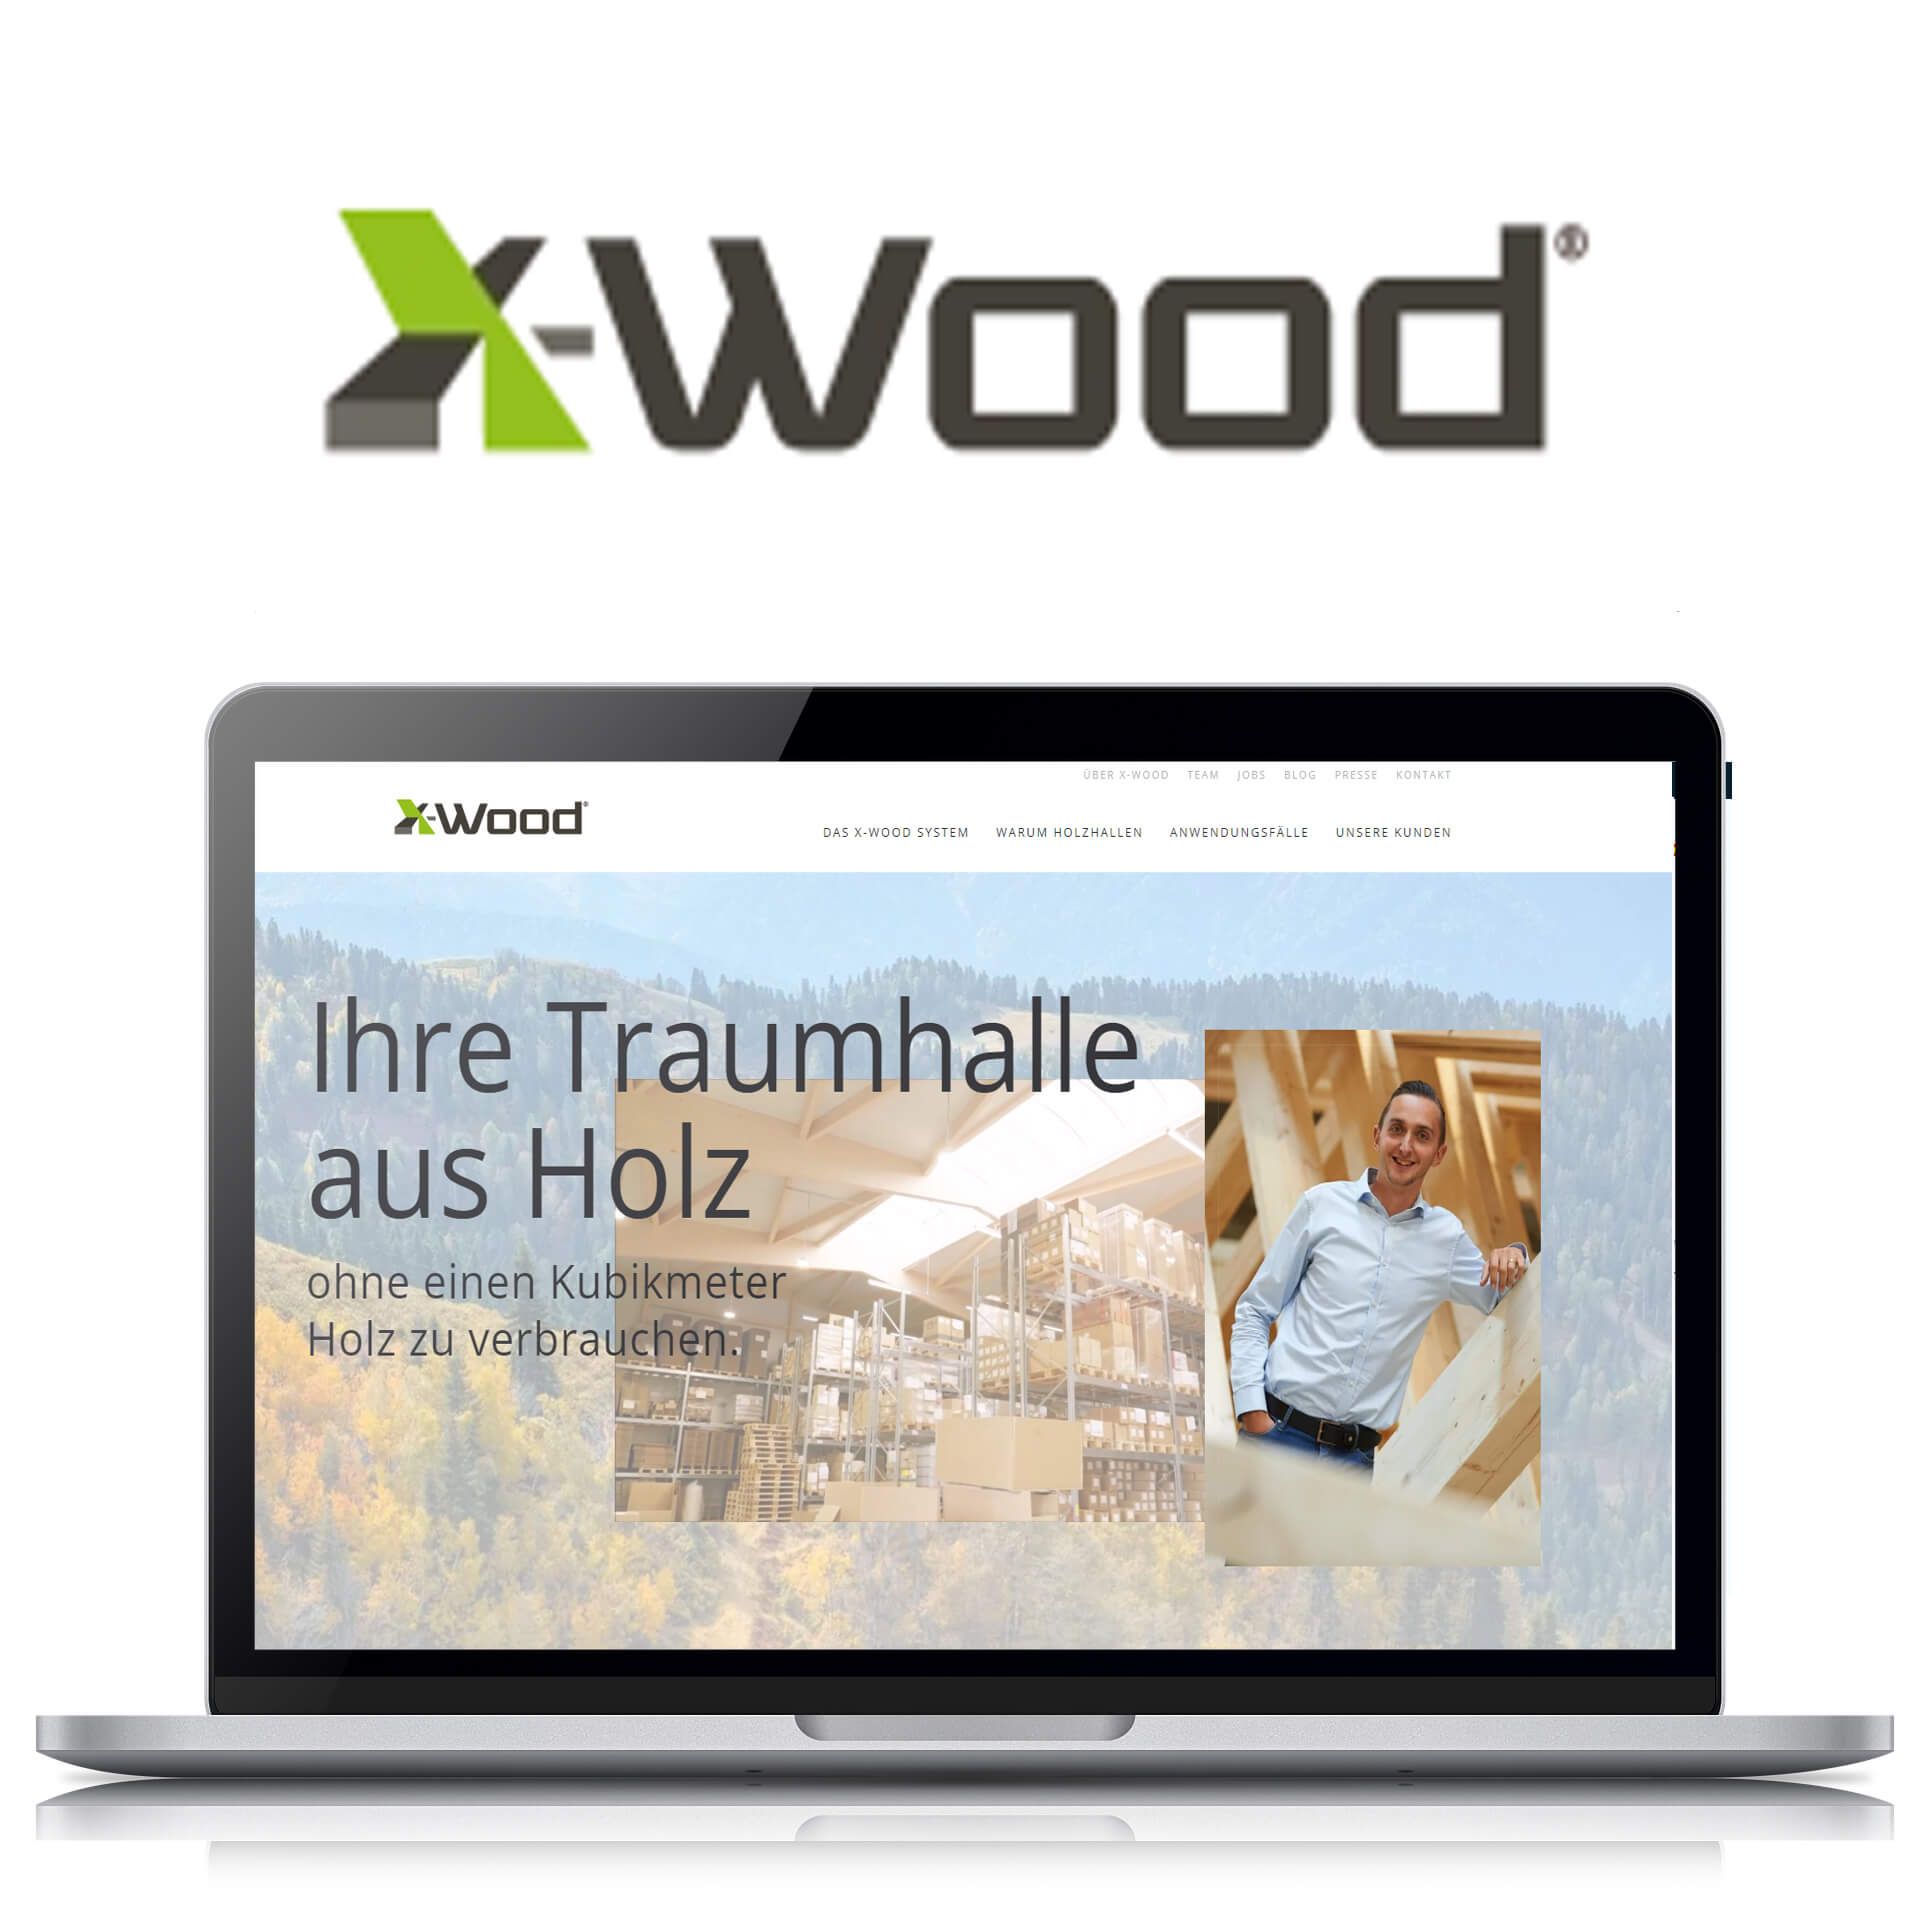 X-Wood Holzhallen